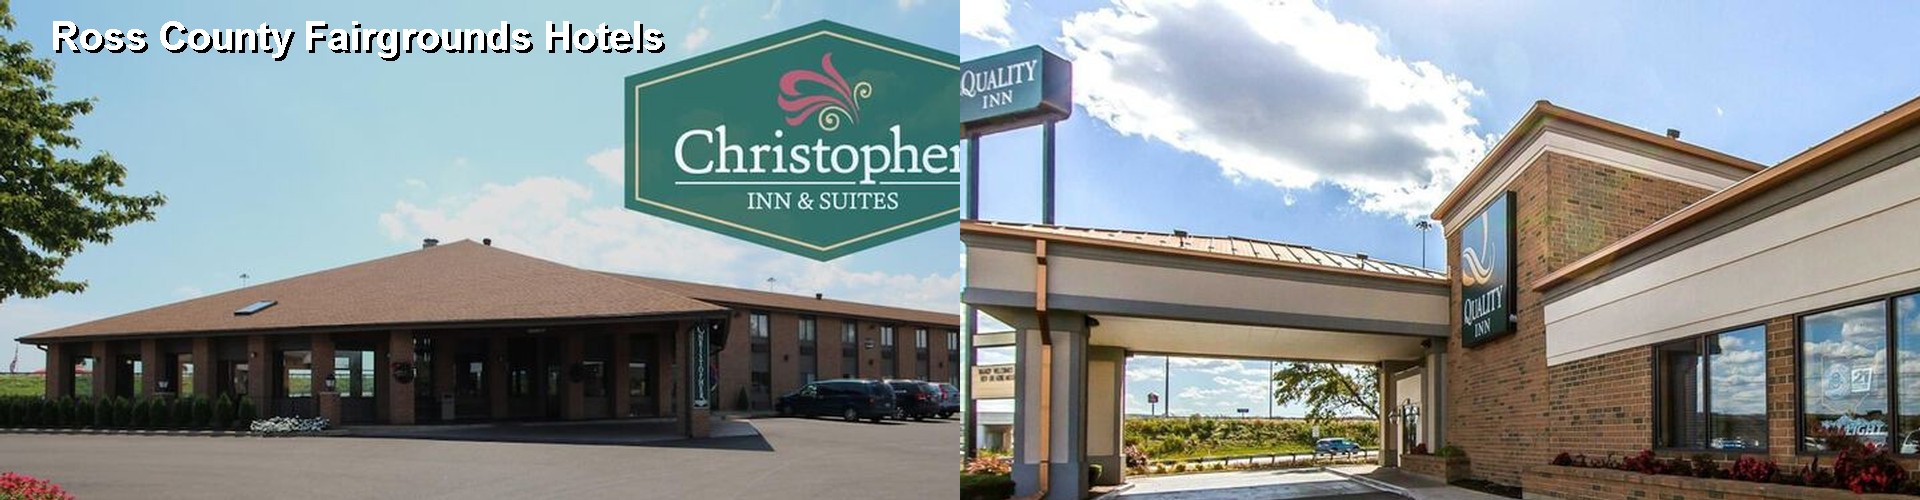 5 Best Hotels near Ross County Fairgrounds